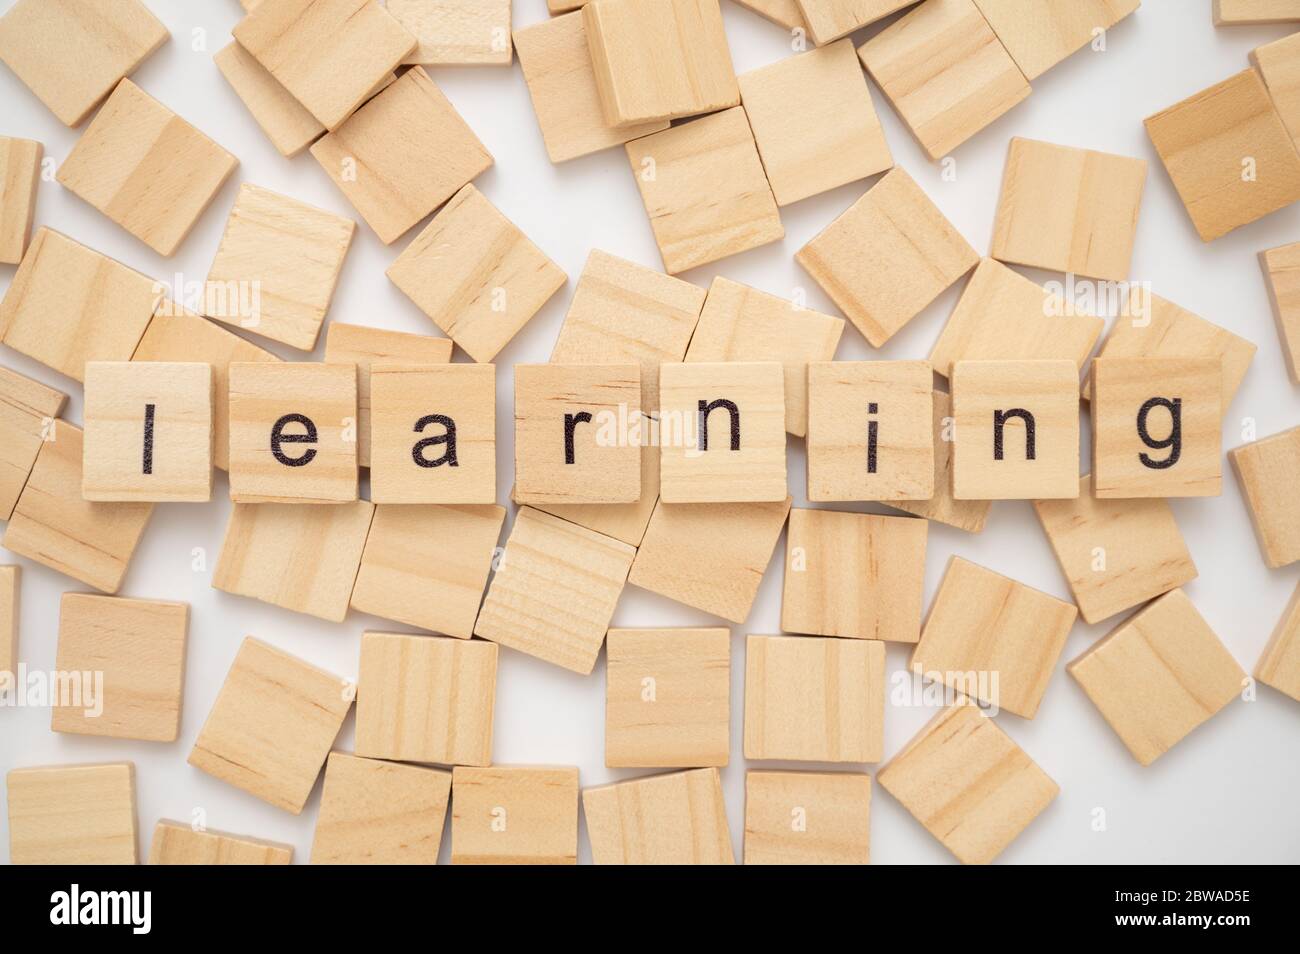 Wooden letter tiles spelling the word LEARNING Stock Photo